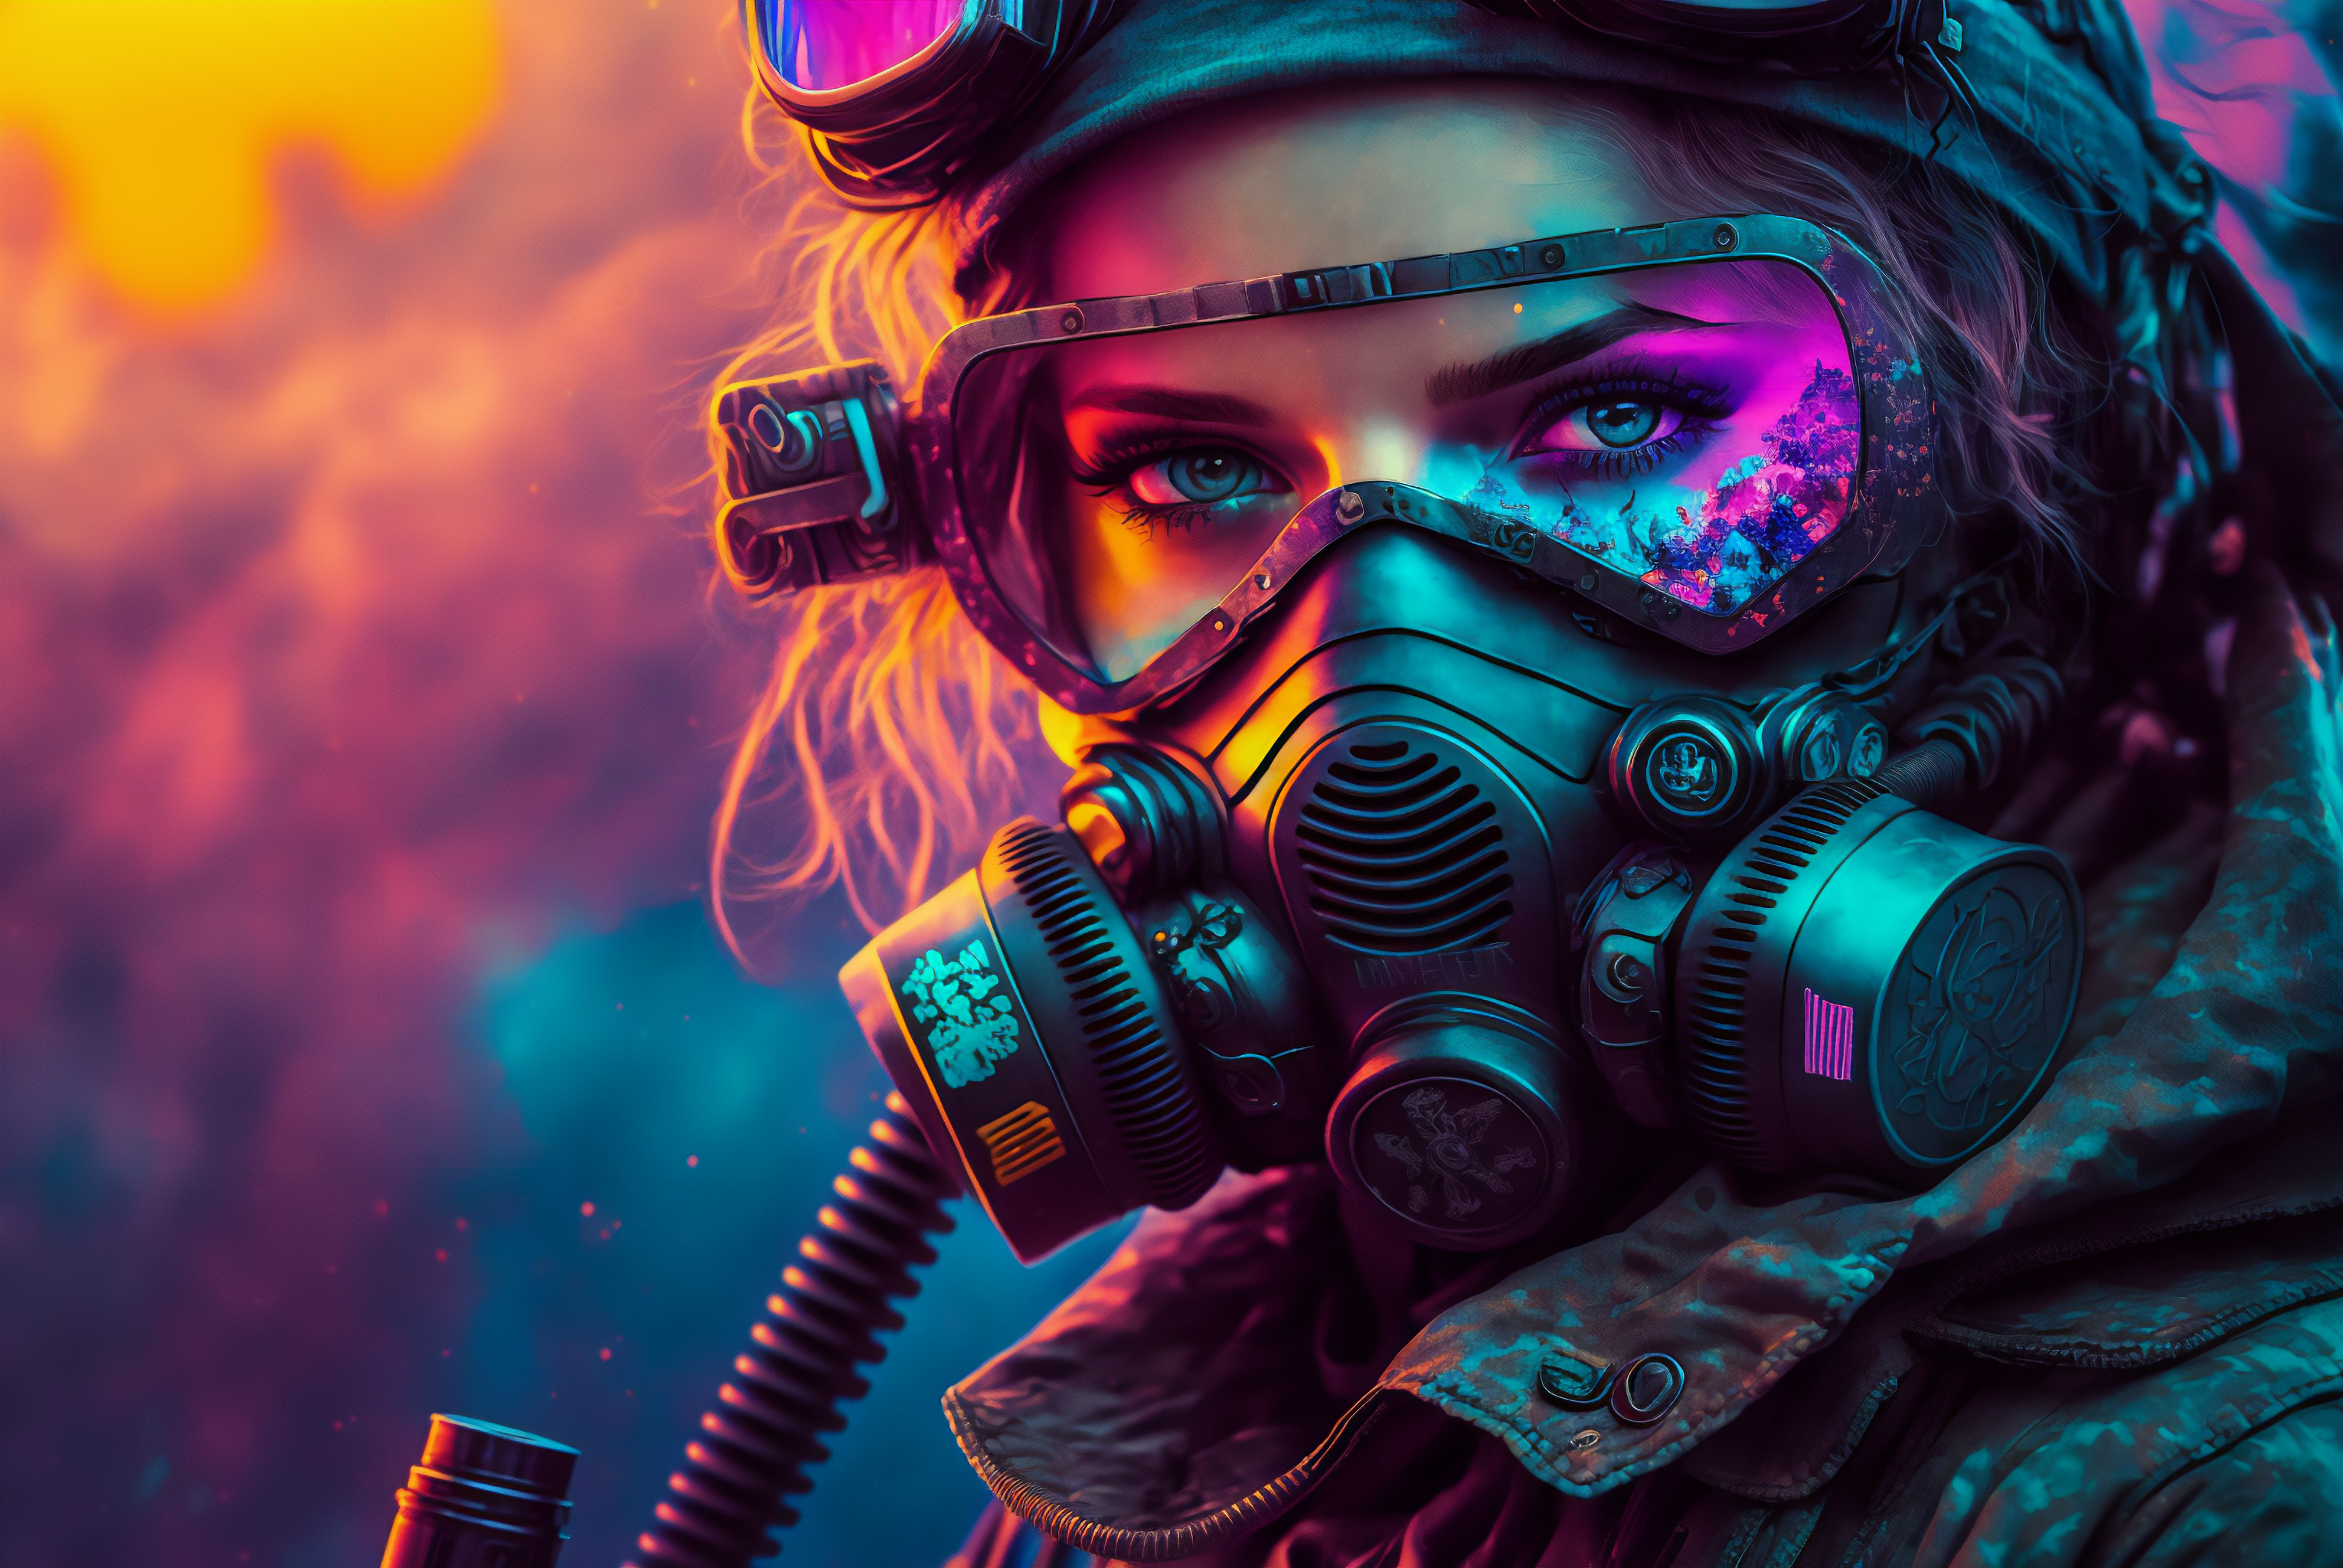 General 3060x2048 AI art women cyberpunk gas masks eyes neon colorful portrait psychedelic